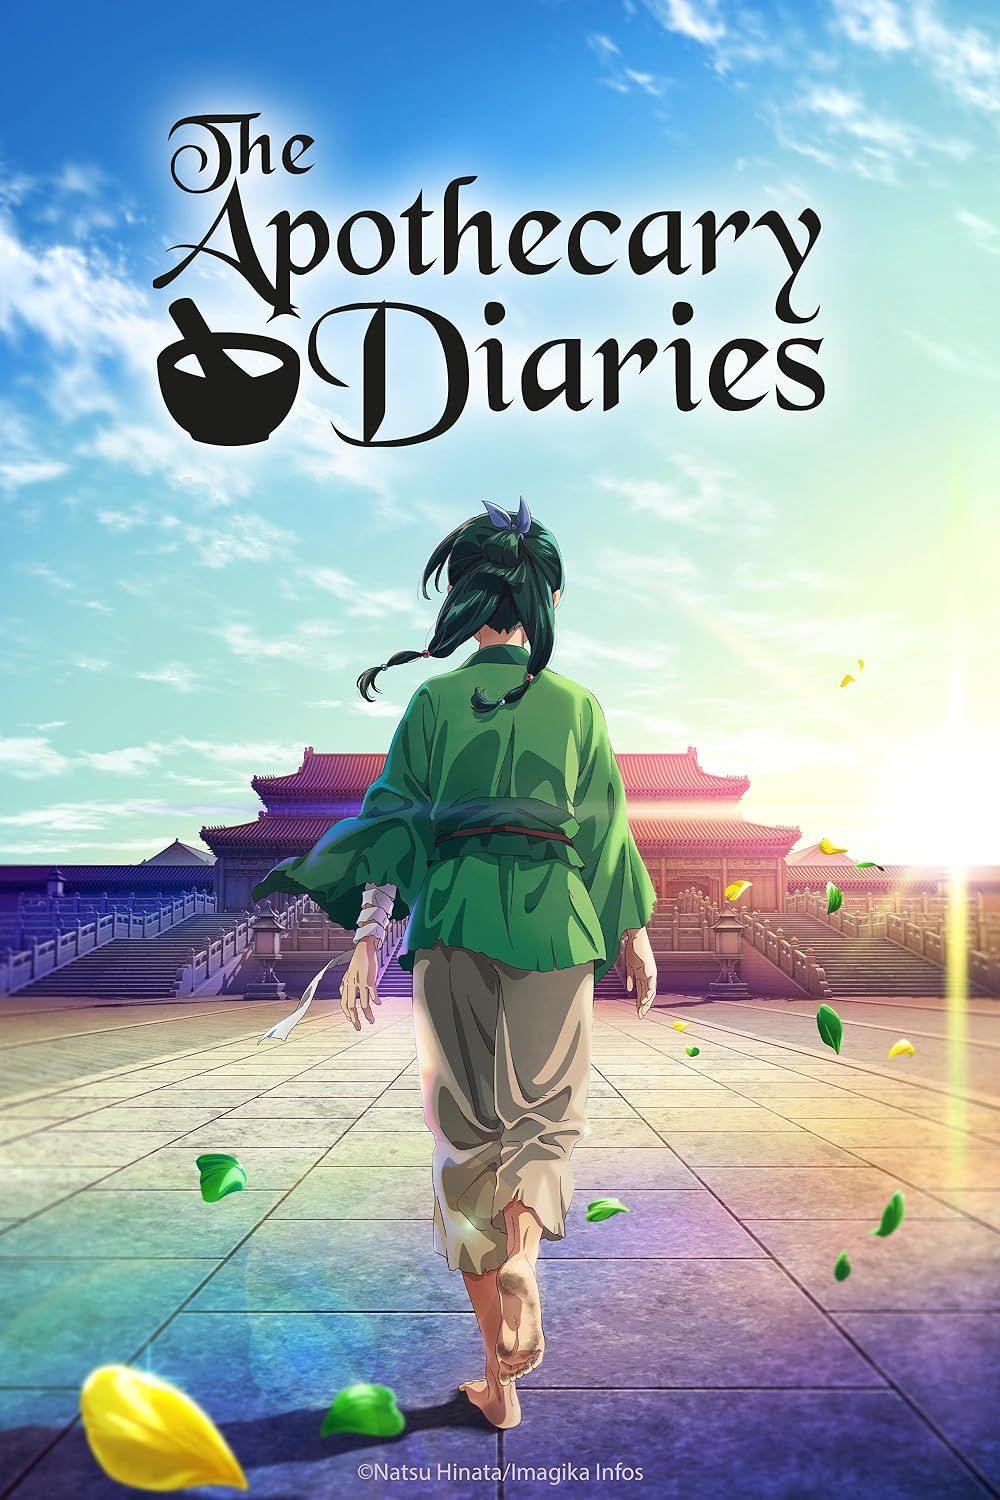 The Apothecary Diaries anime poster.